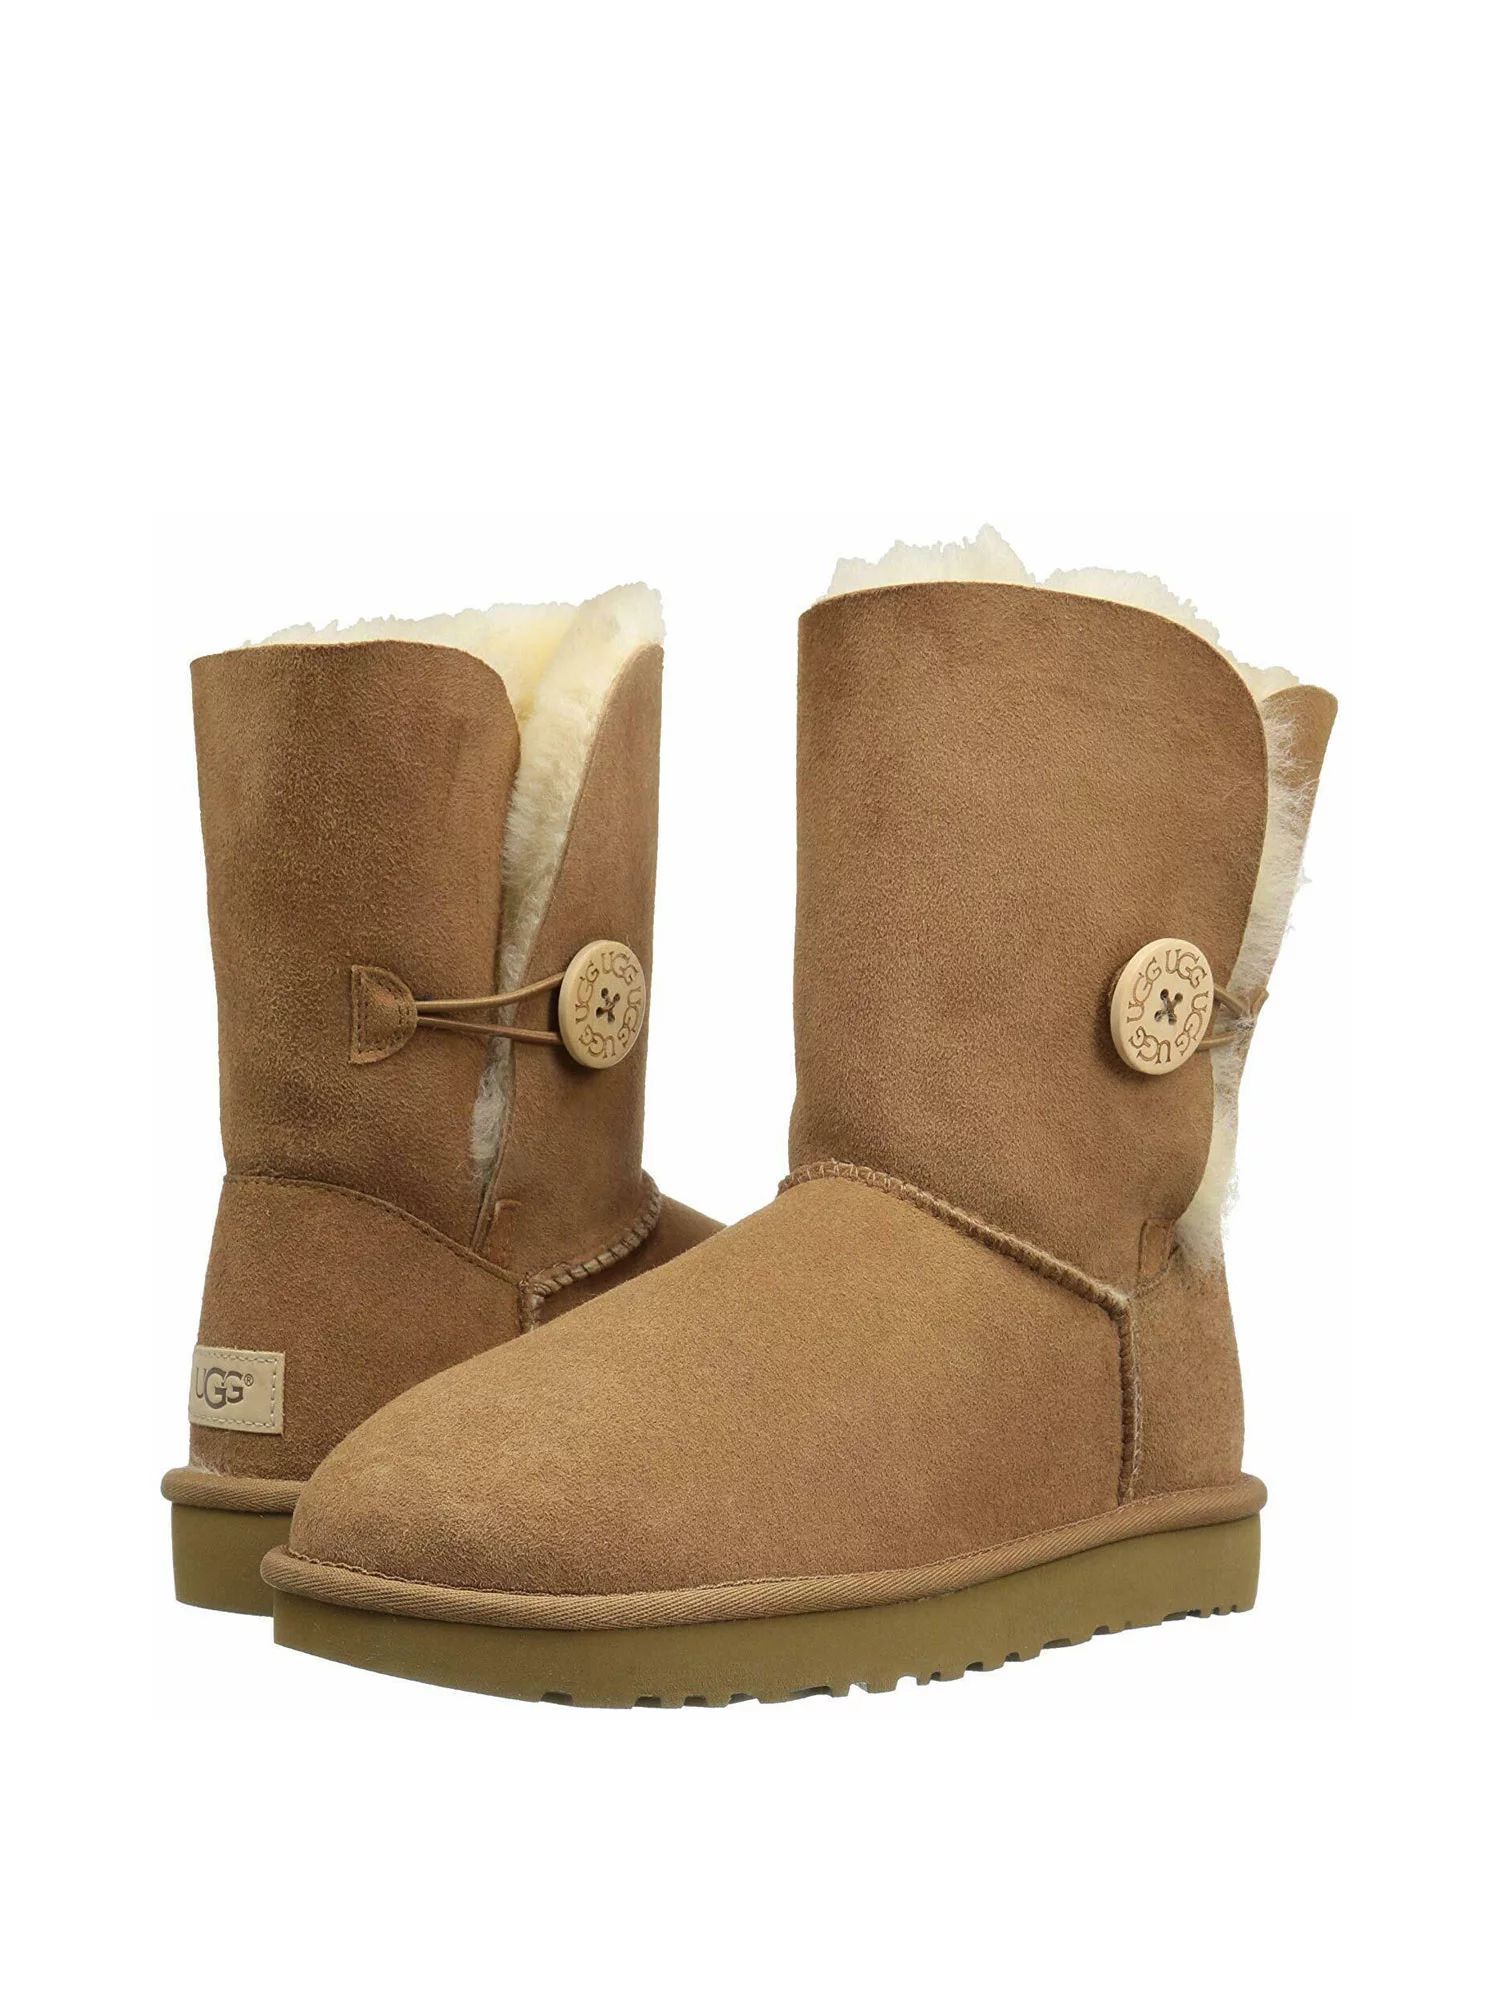 UGG Bailey Button II Women's Twinface Sheepskin Boots 1016226 | Walmart (US)